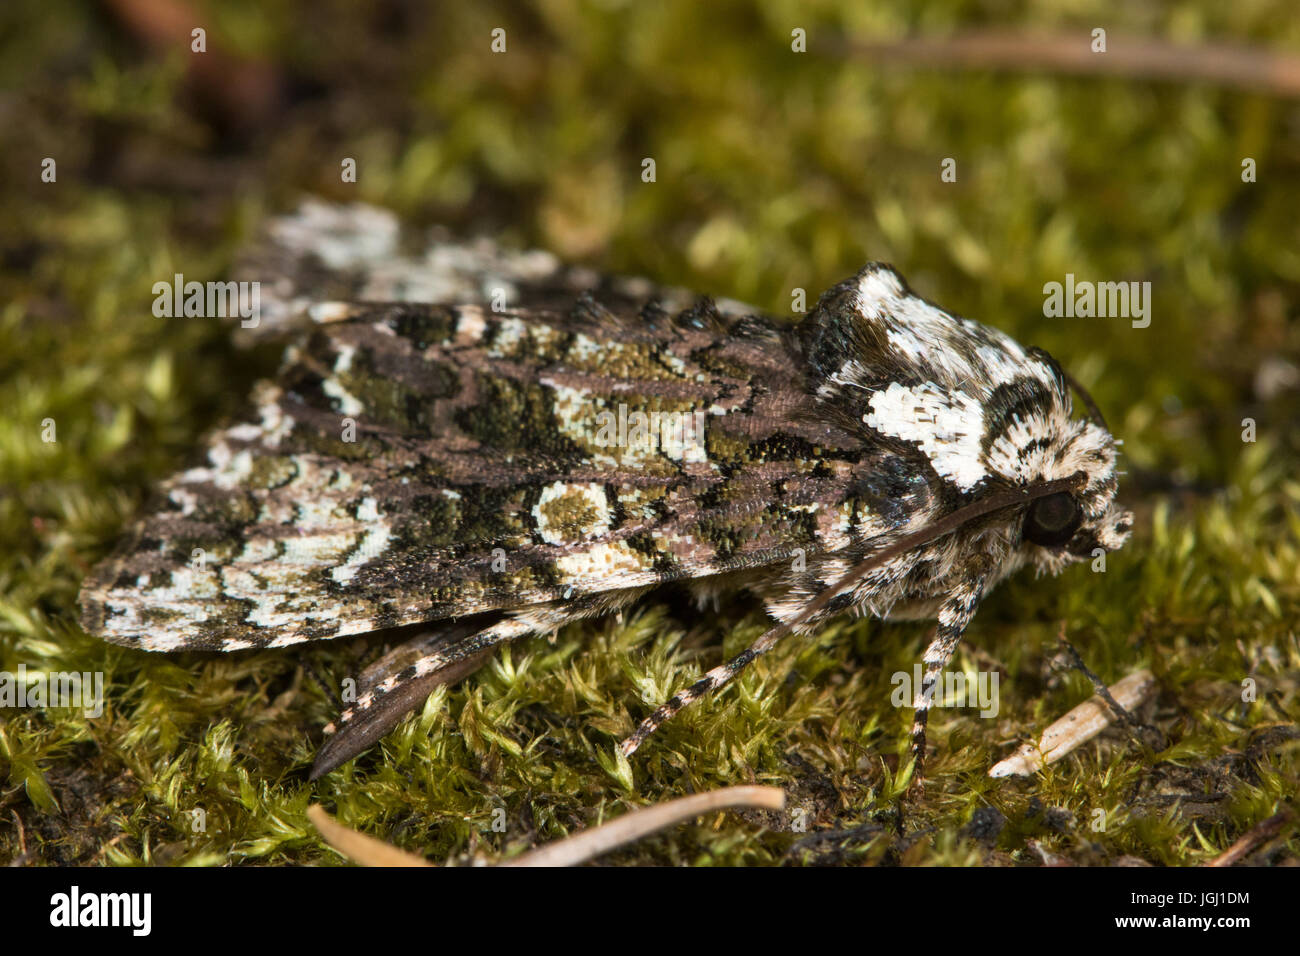 Coronet (Craniophora ligustri) moth Foto Stock